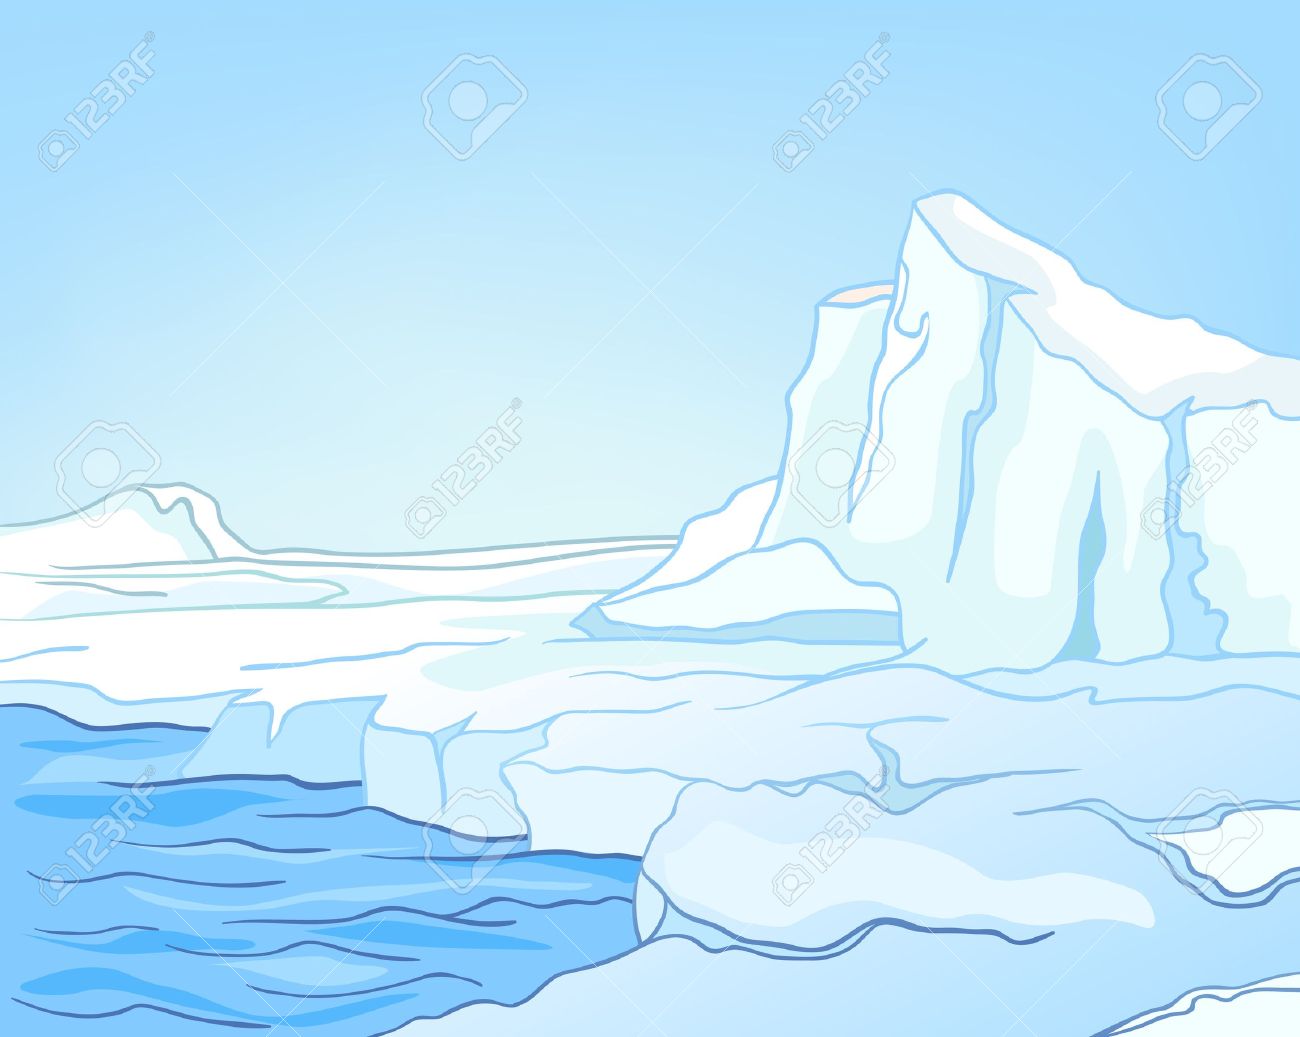 Ice landscape clipart - Clipground